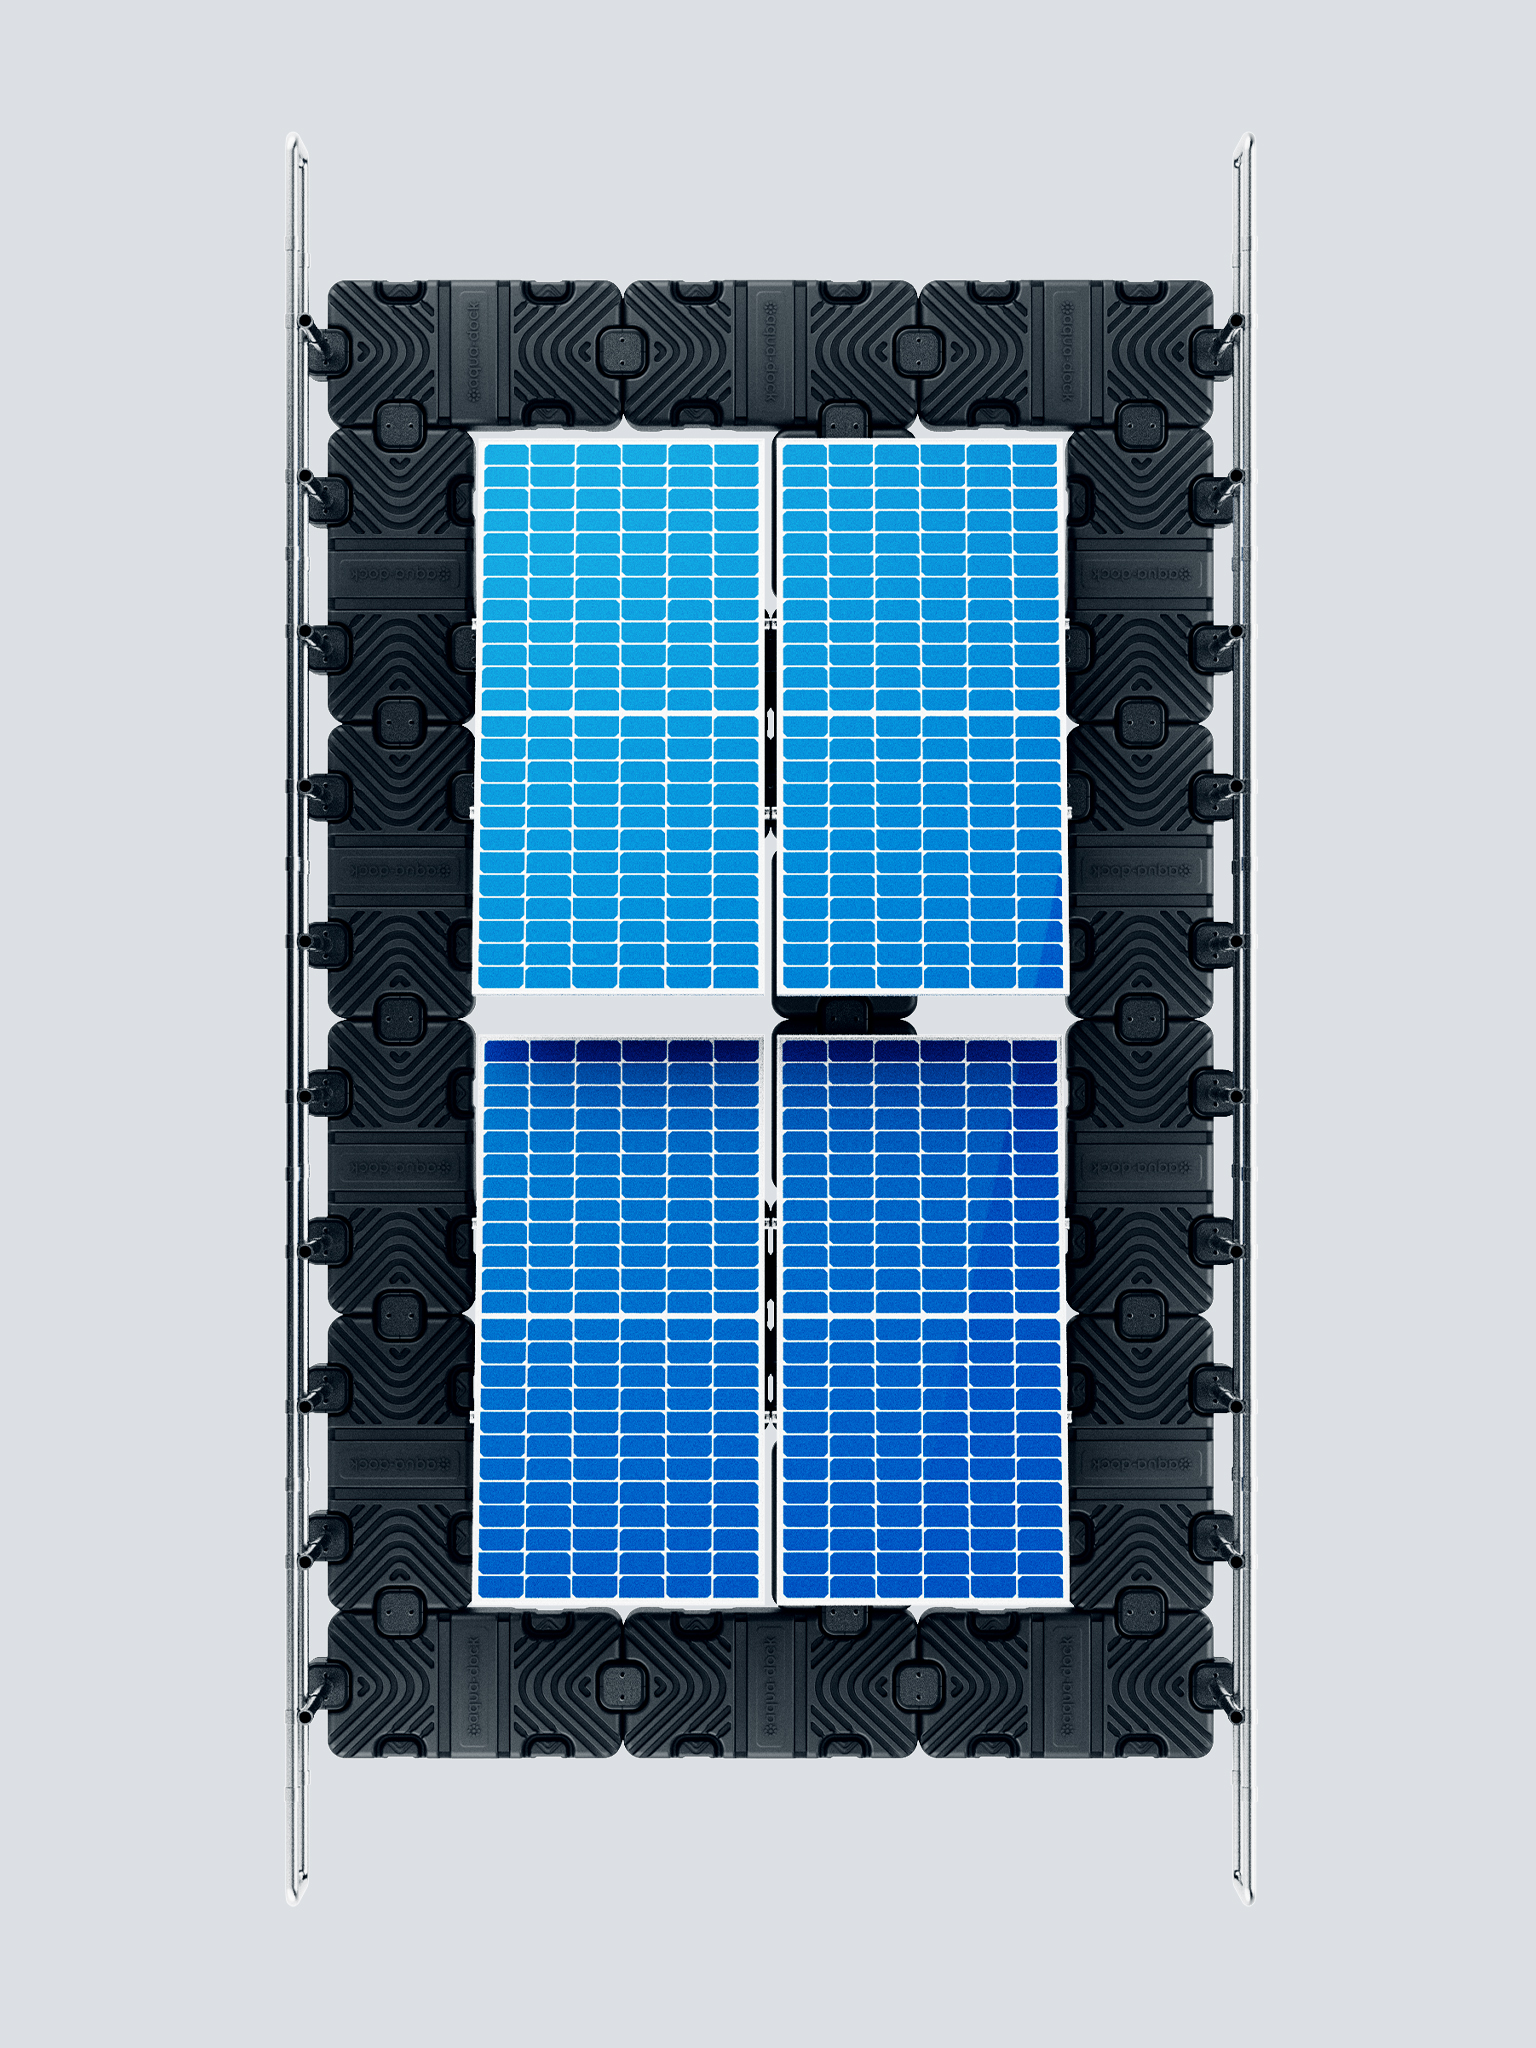 Aqua-Dock Floating Solar Panel System